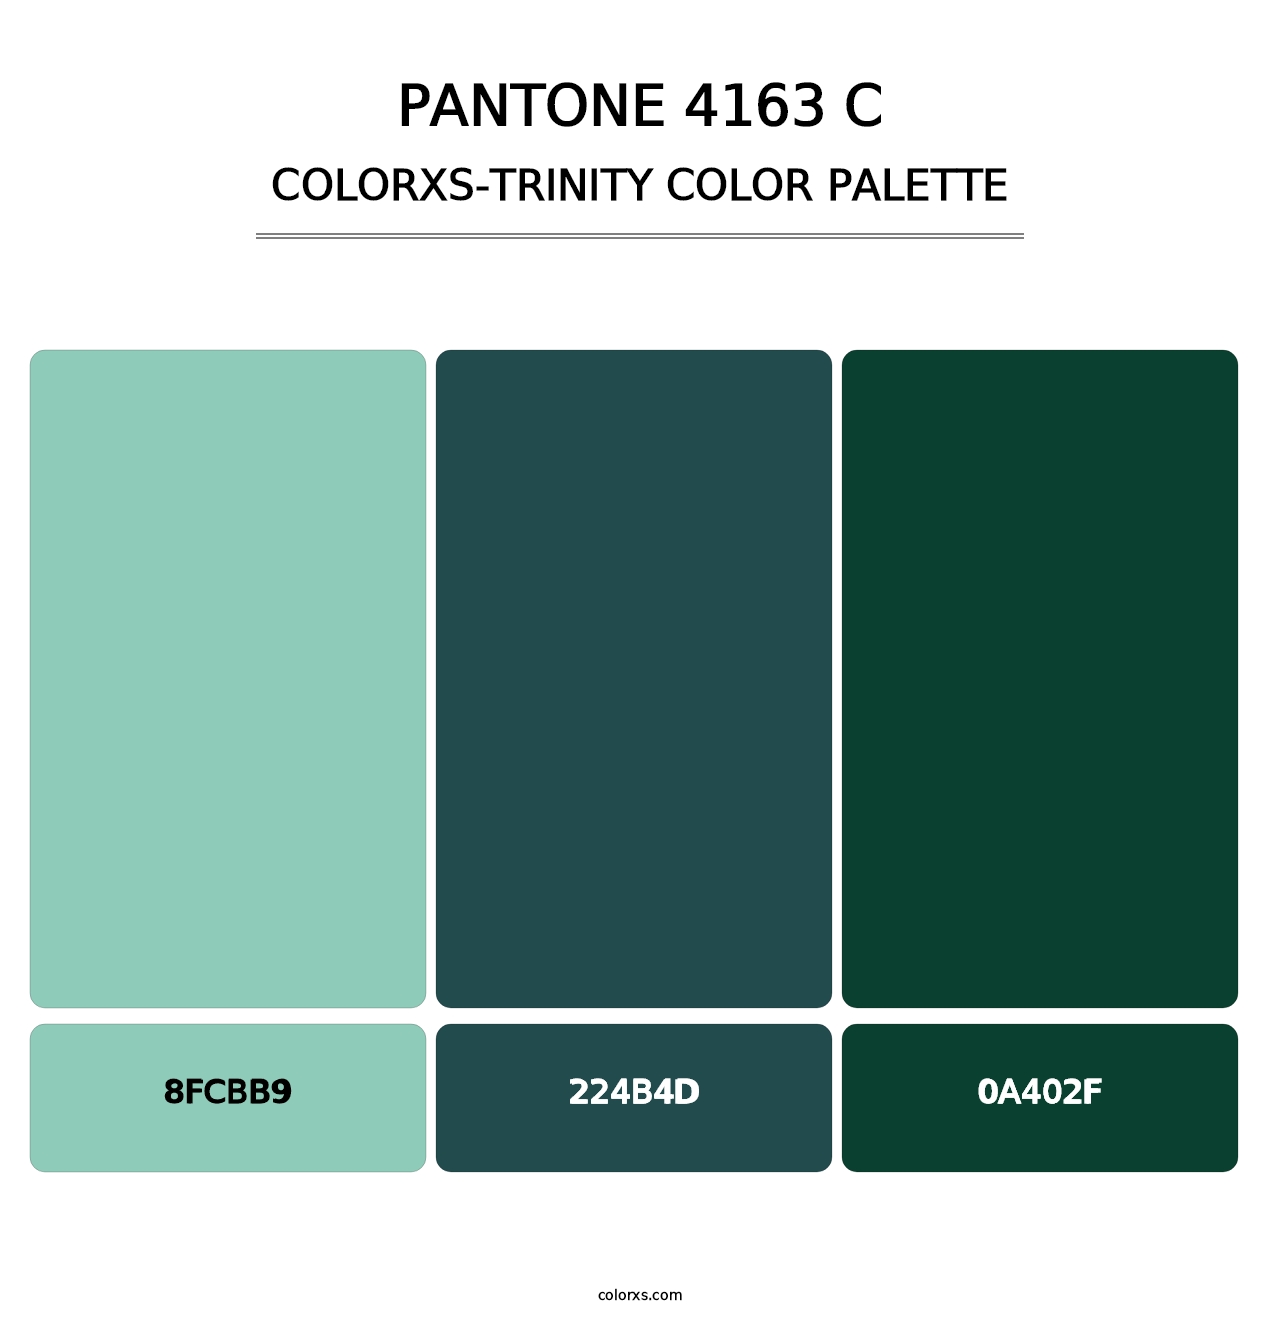 PANTONE 4163 C - Colorxs Trinity Palette